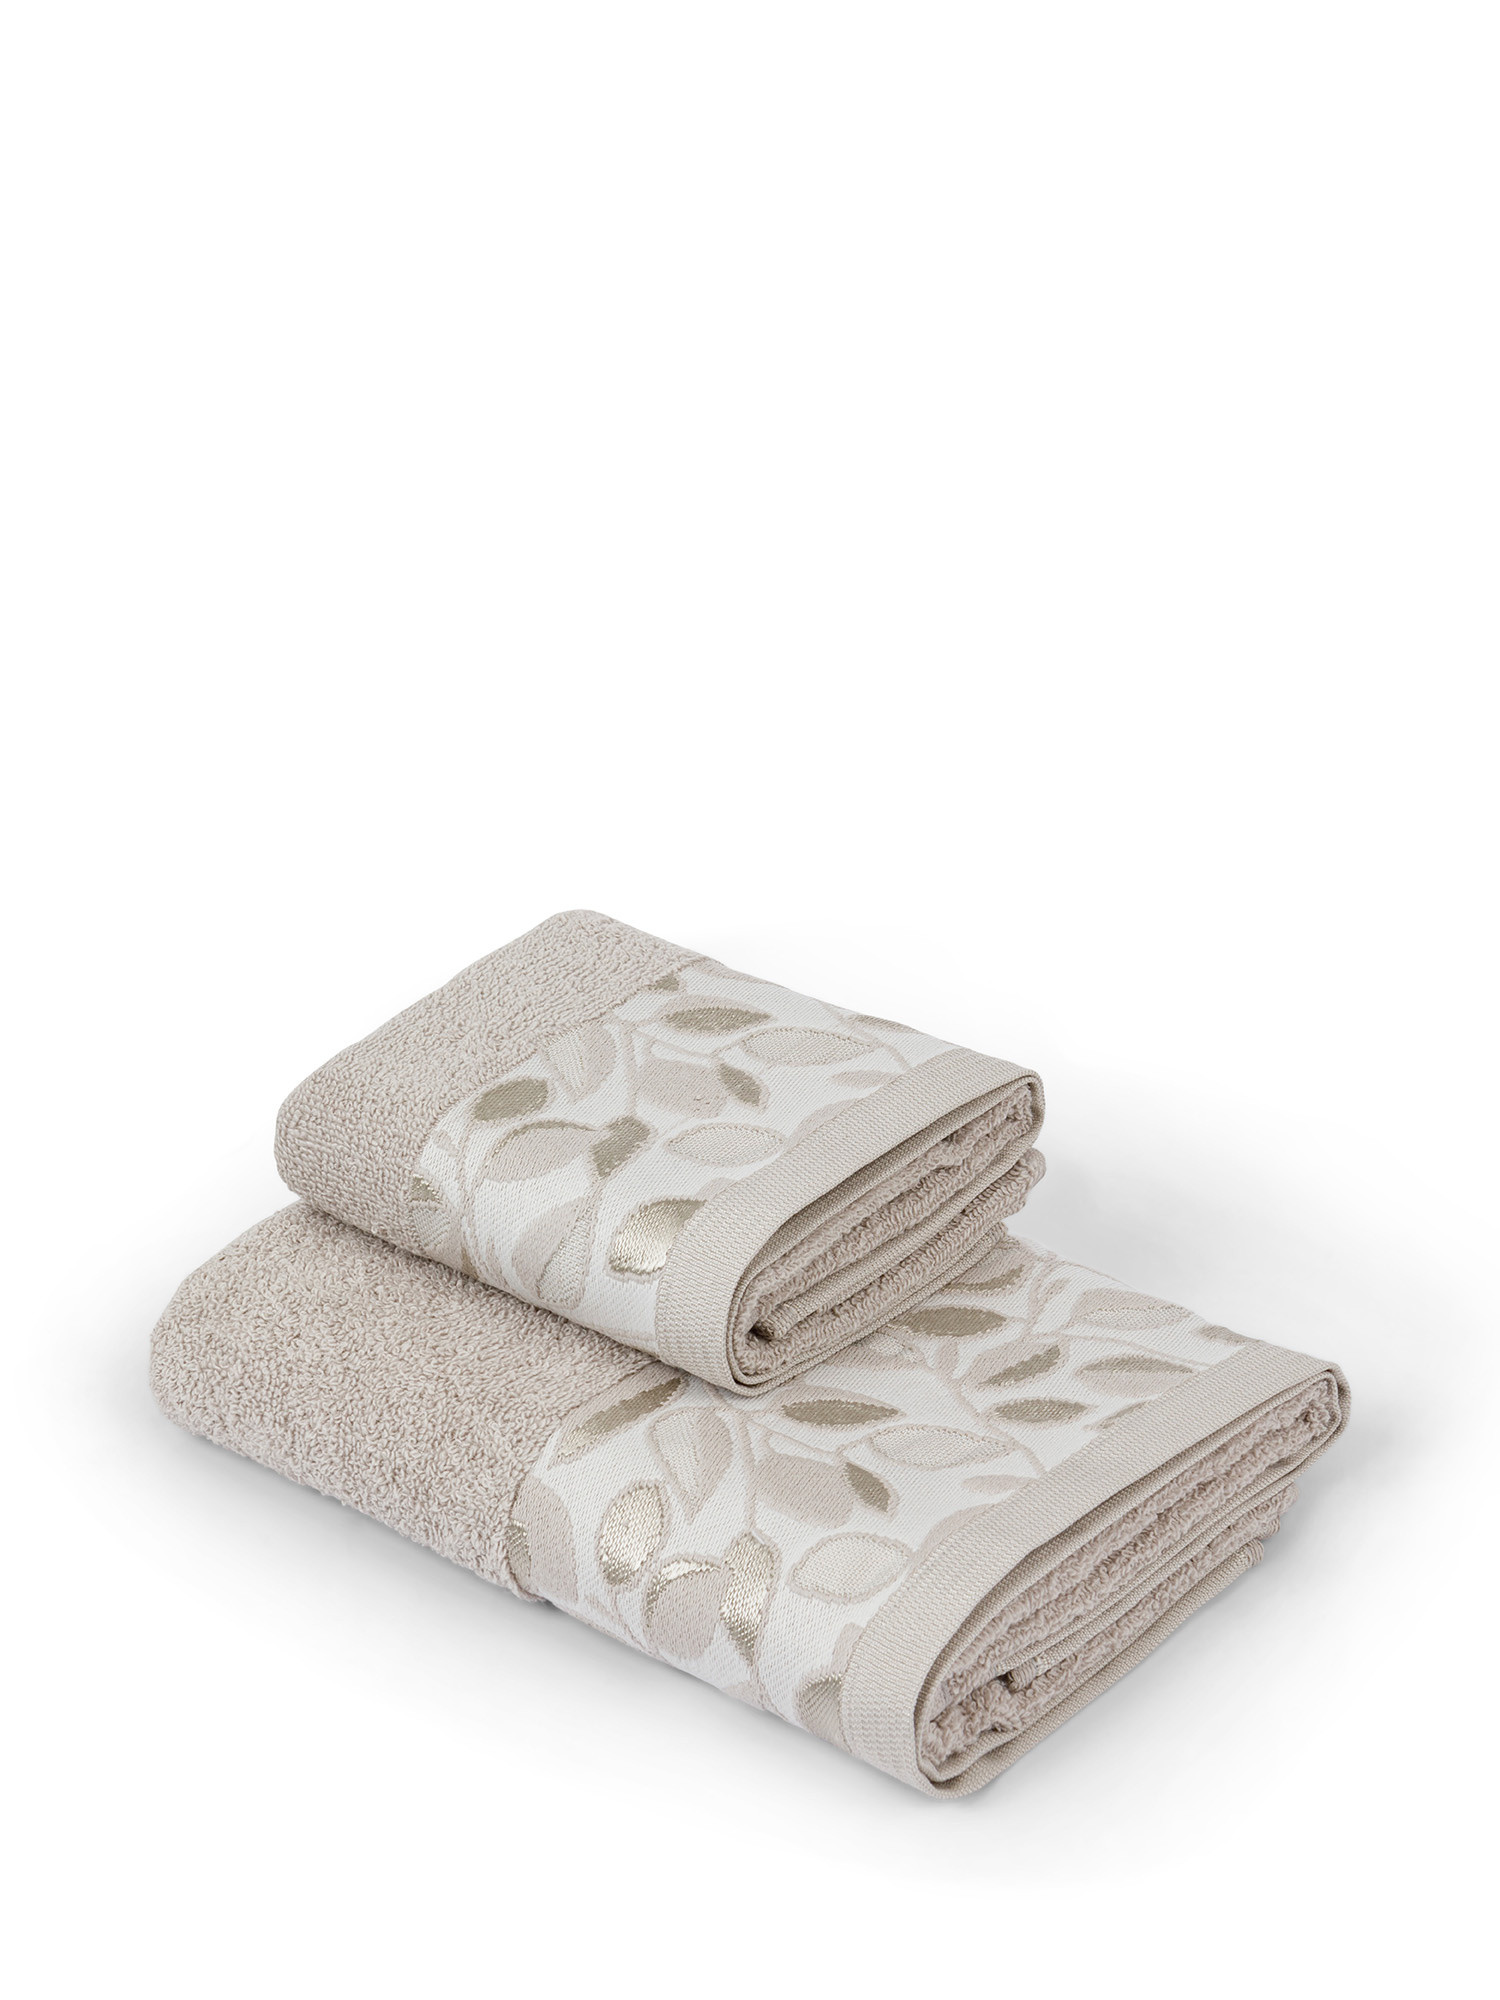 Asciugamano in spugna di puro cotone motivo foglie, Sabbia, large image number 0